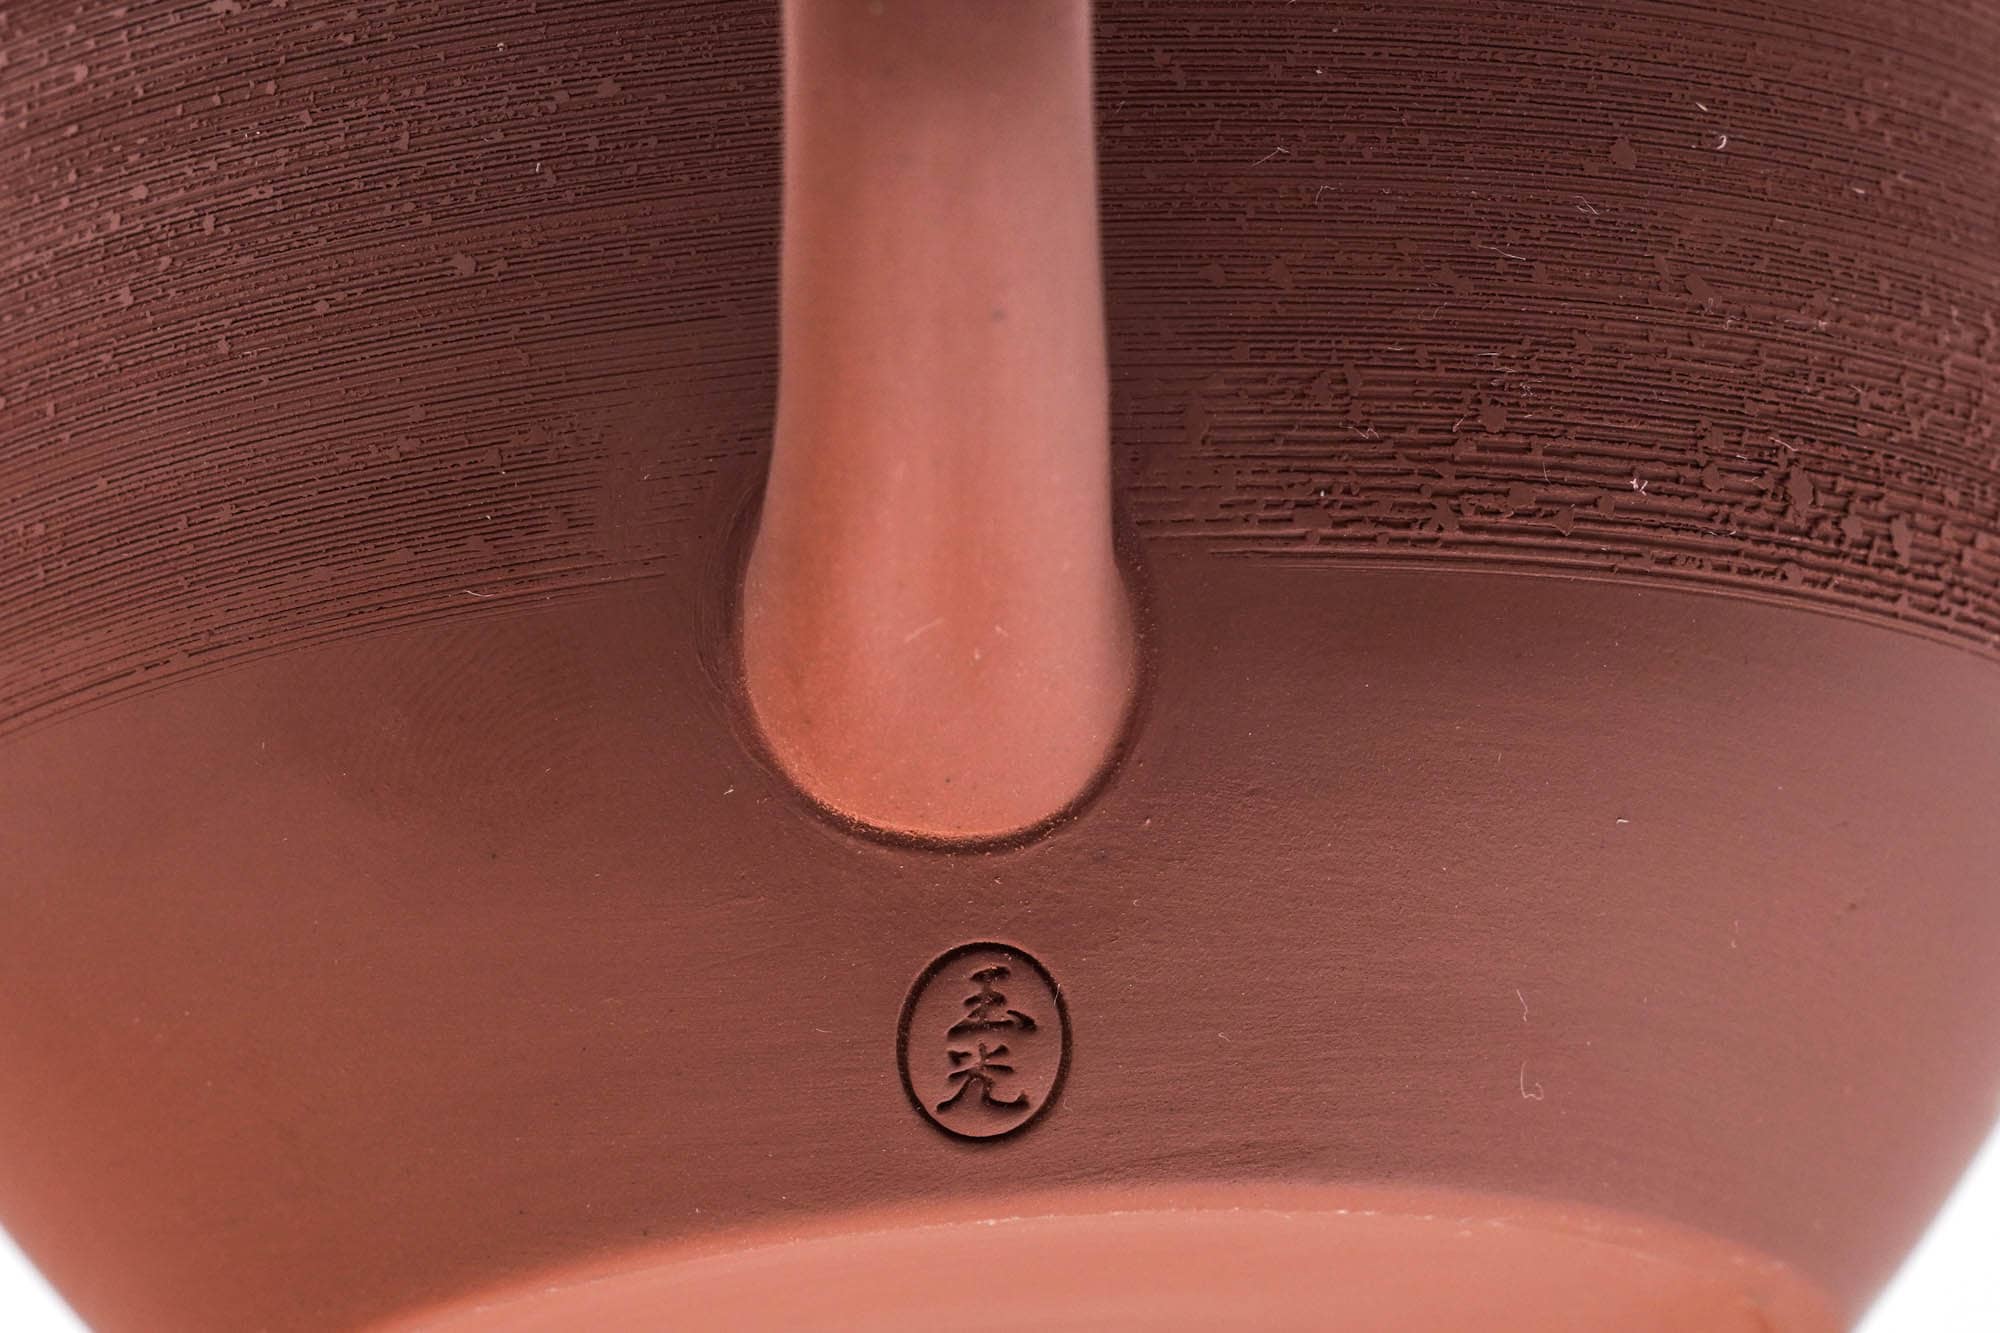 Japanese Kyusu - 玉光 Gyokko Kiln - Matsugawa Textured Tokoname-yaki Rear-Handled Teapot - 250ml